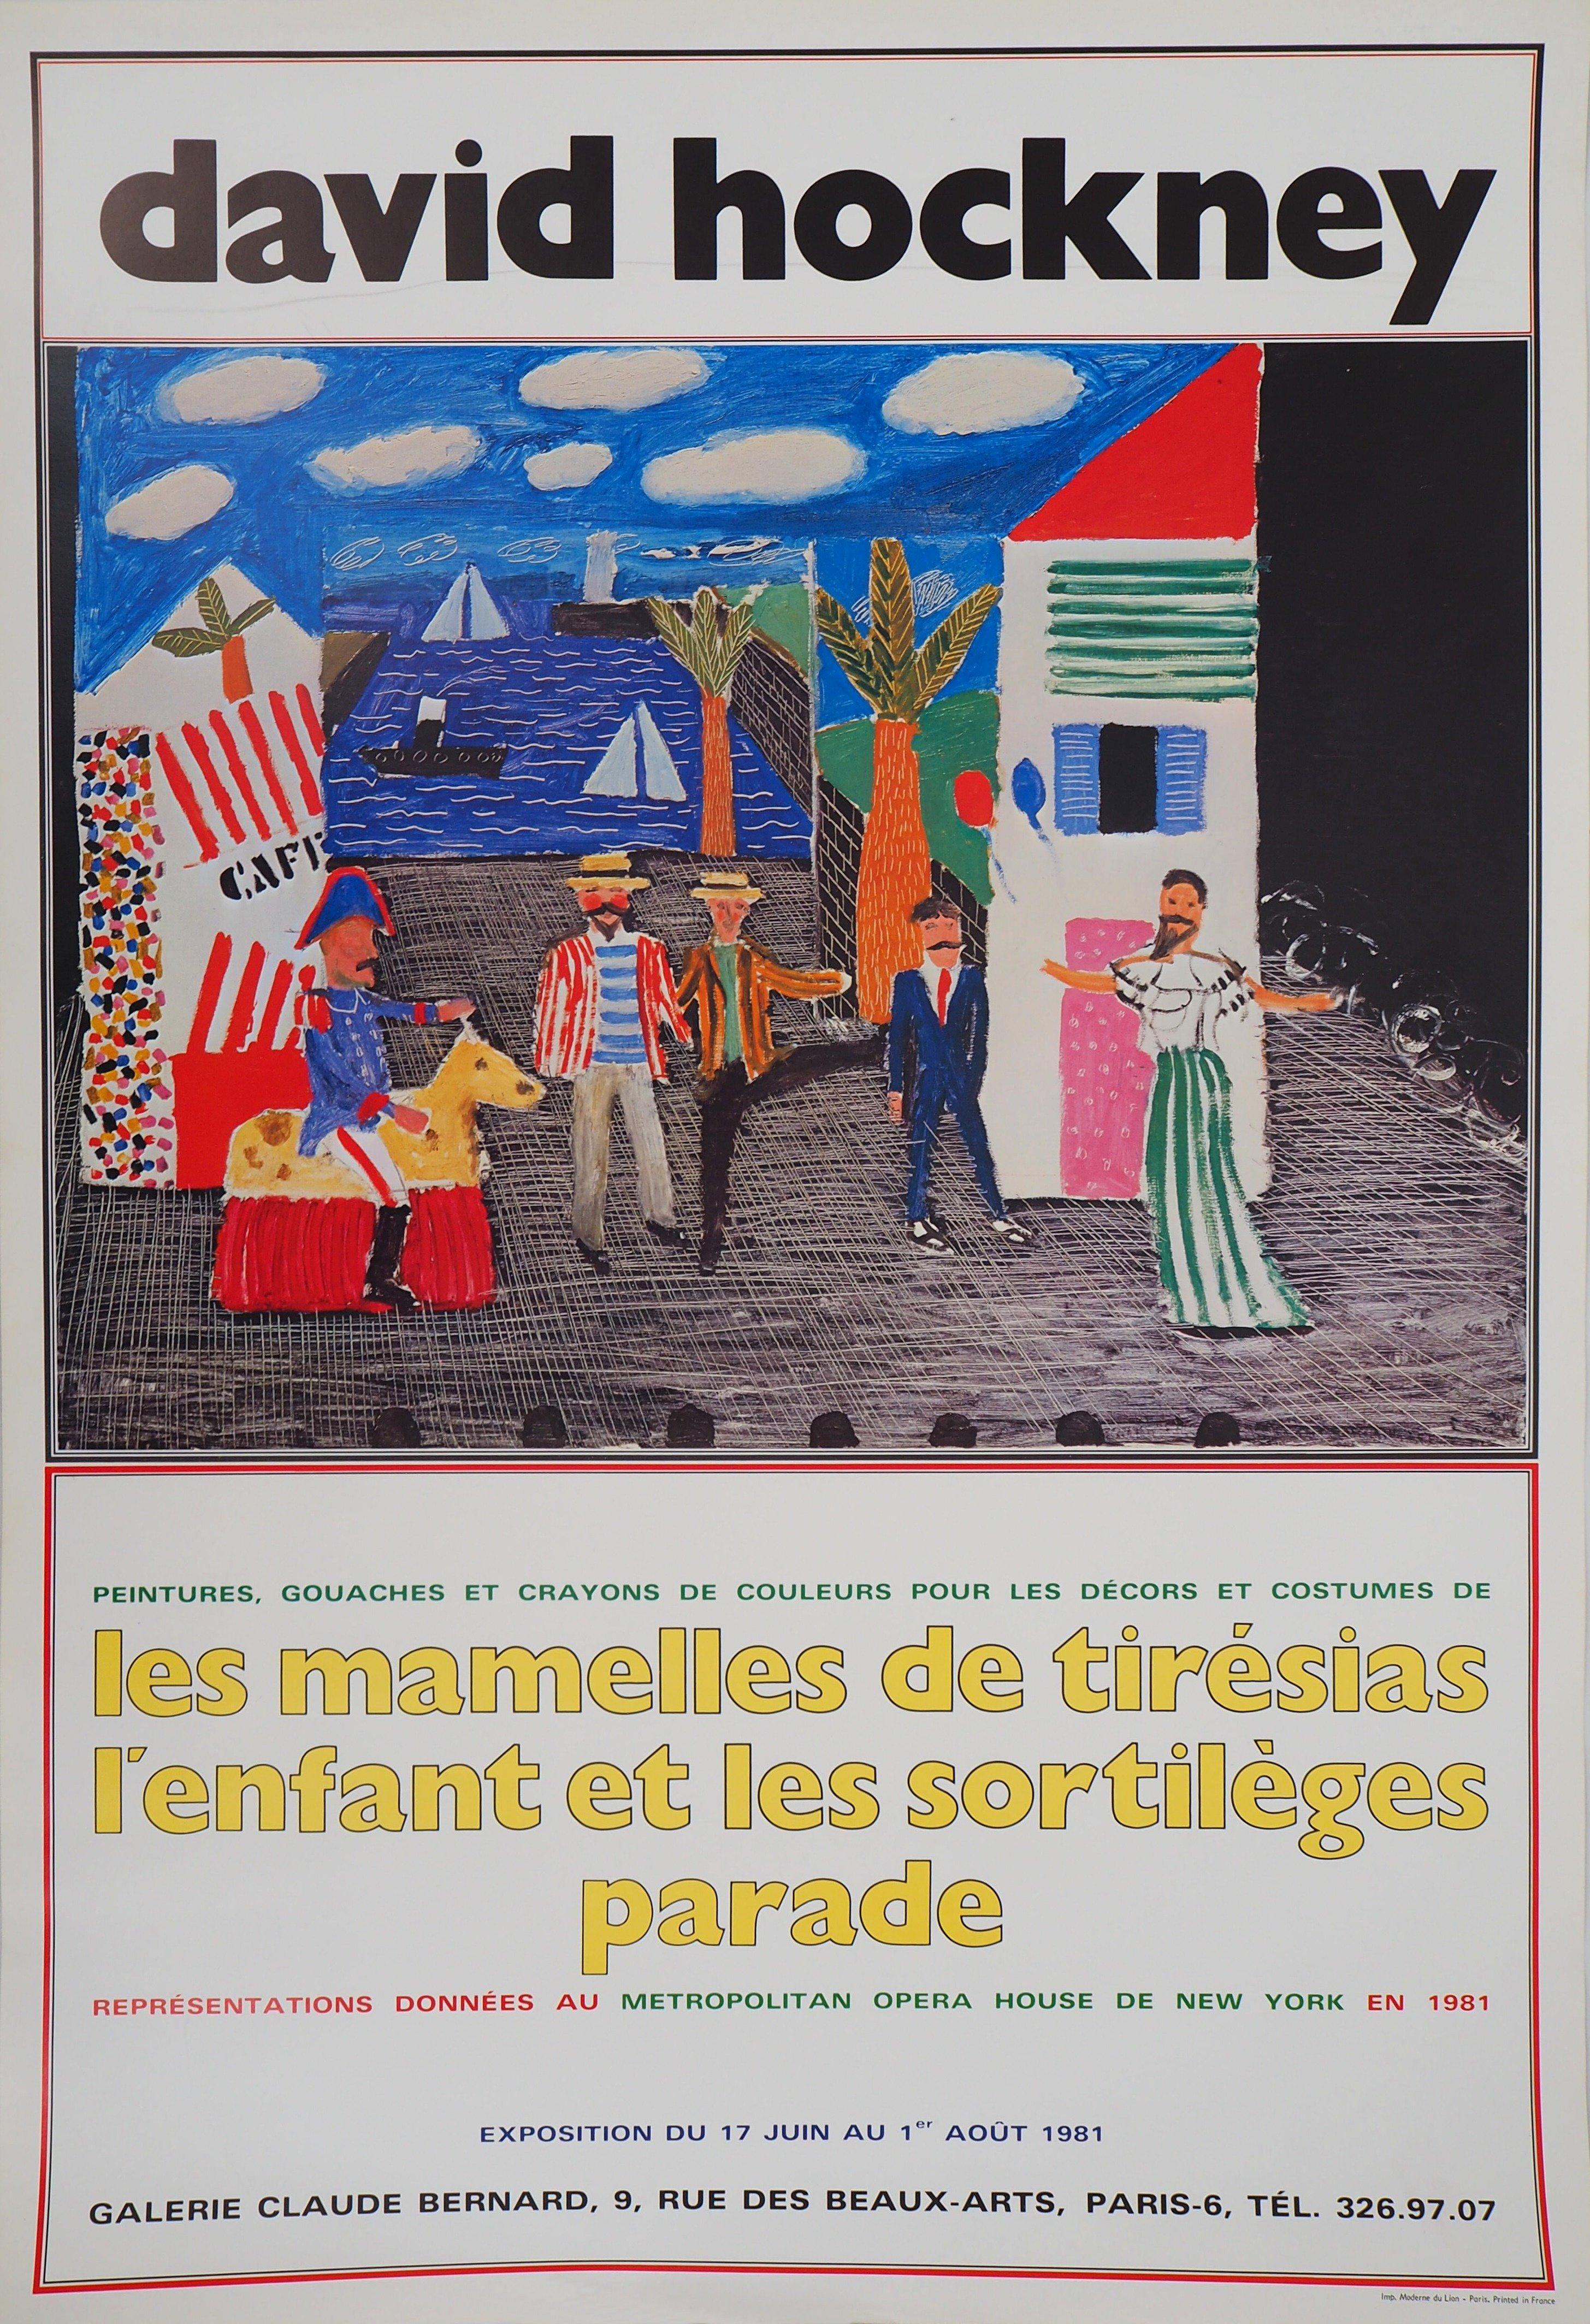 (after) David Hockney Figurative Print - New York Metropolitan Opera House : Tirésias - Original Vintage Poster (1981)